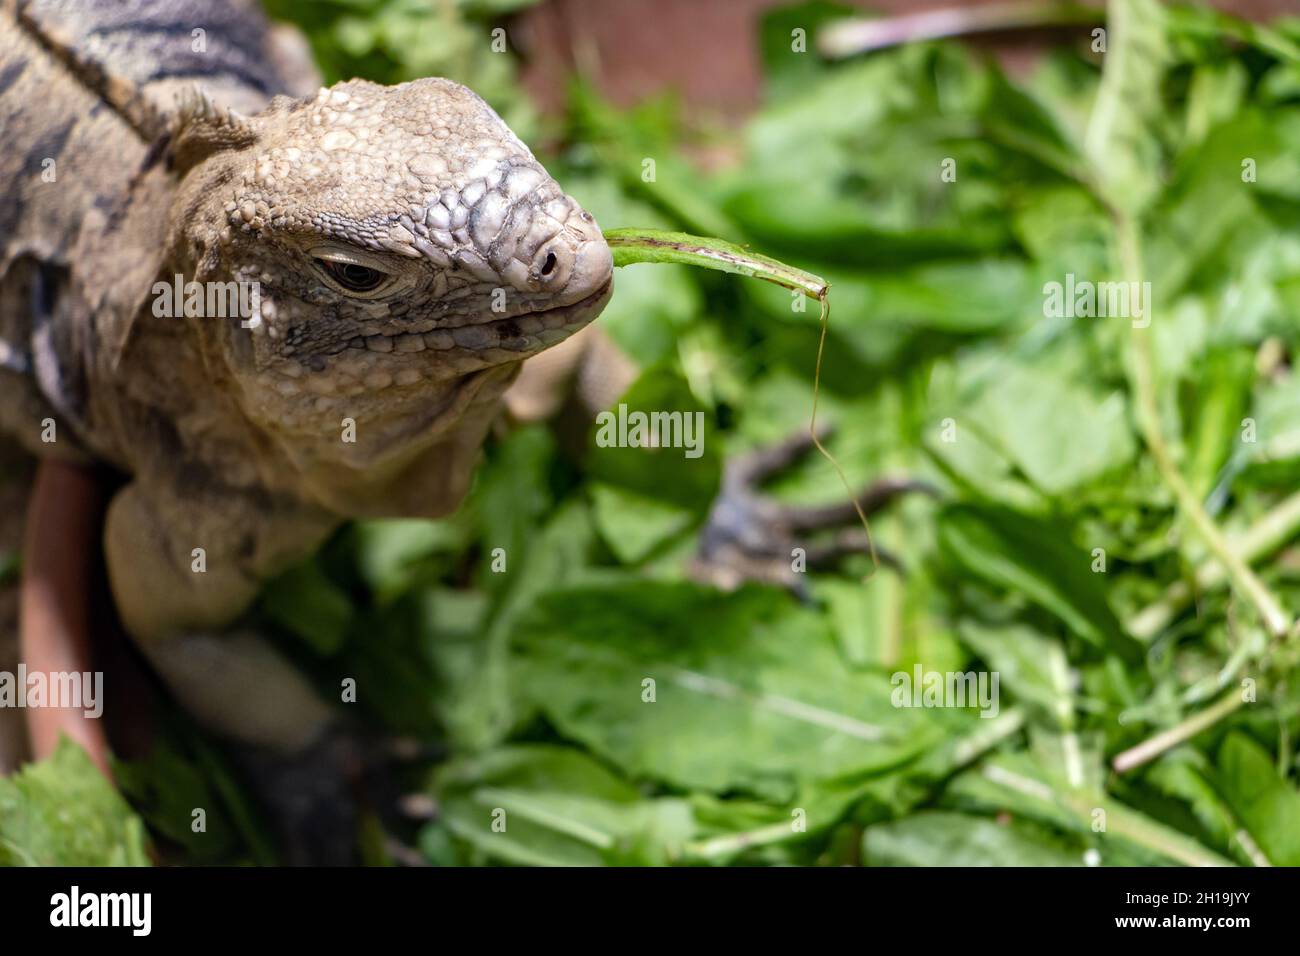 The Cuban rock iguana - Cuban ground iguana (Cyclura nubila) is feeding a green plant from a bowl Stock Photo